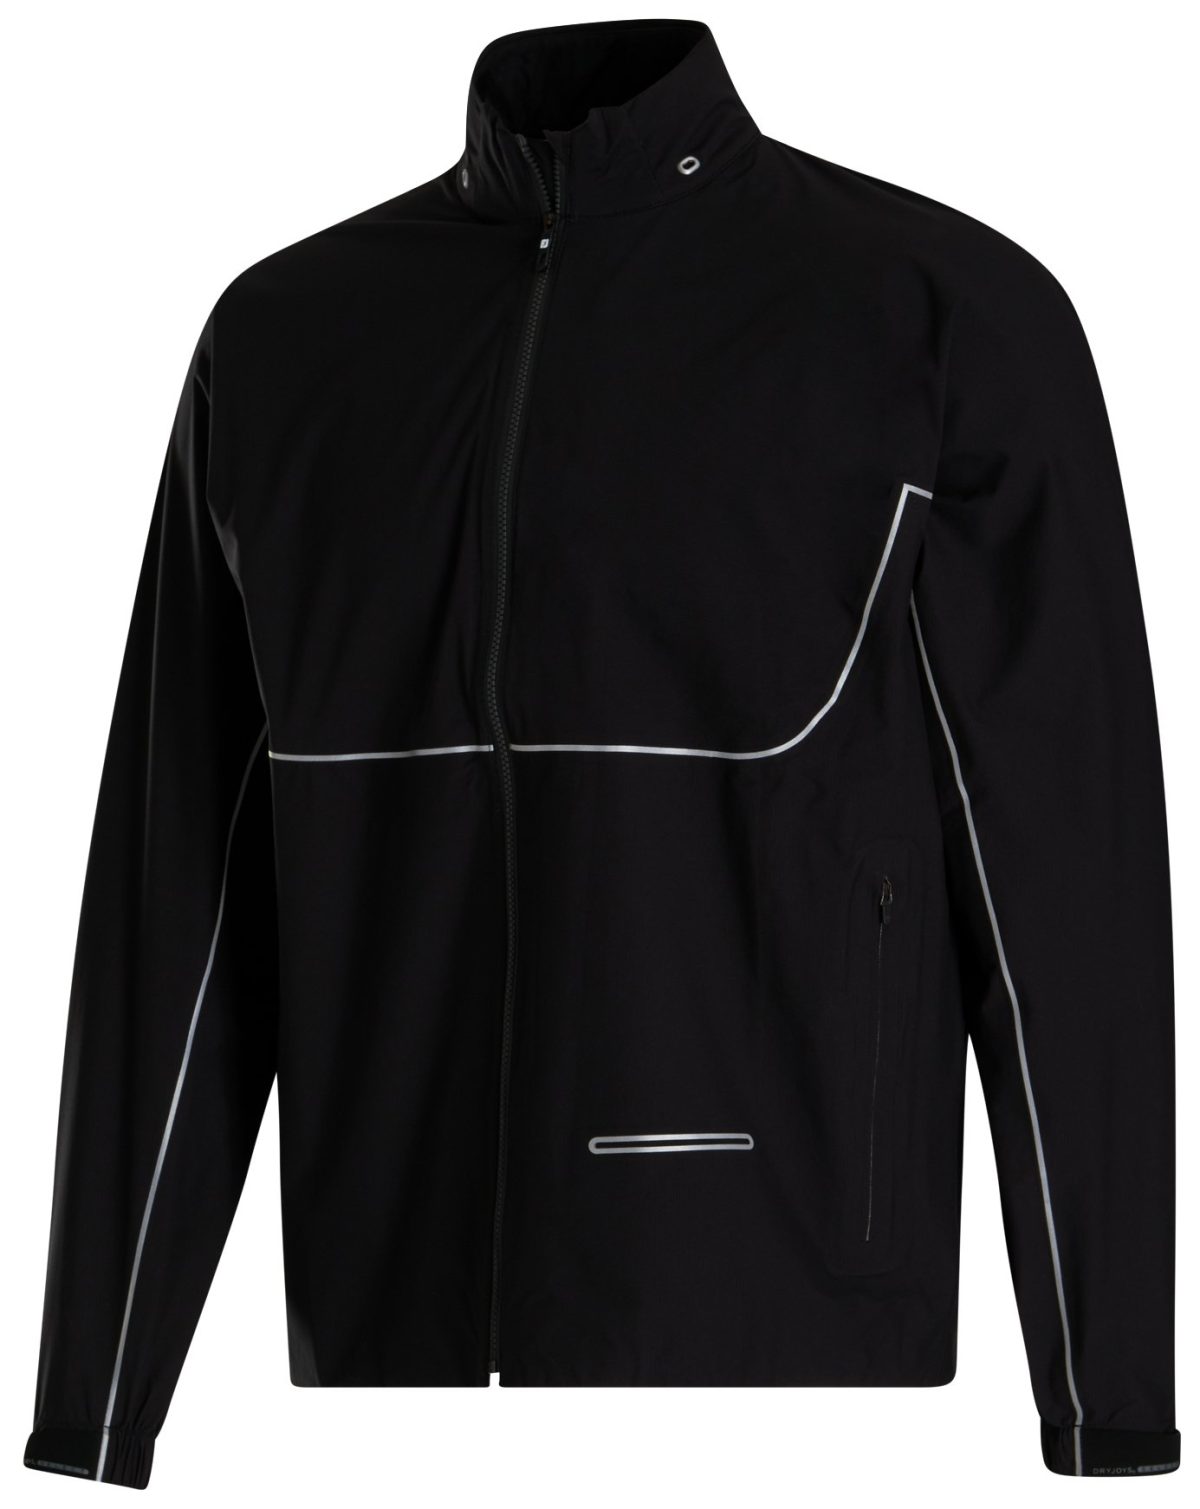 FootJoy Men's Dryjoys Select Golf Rain Jacket in Black, Size S